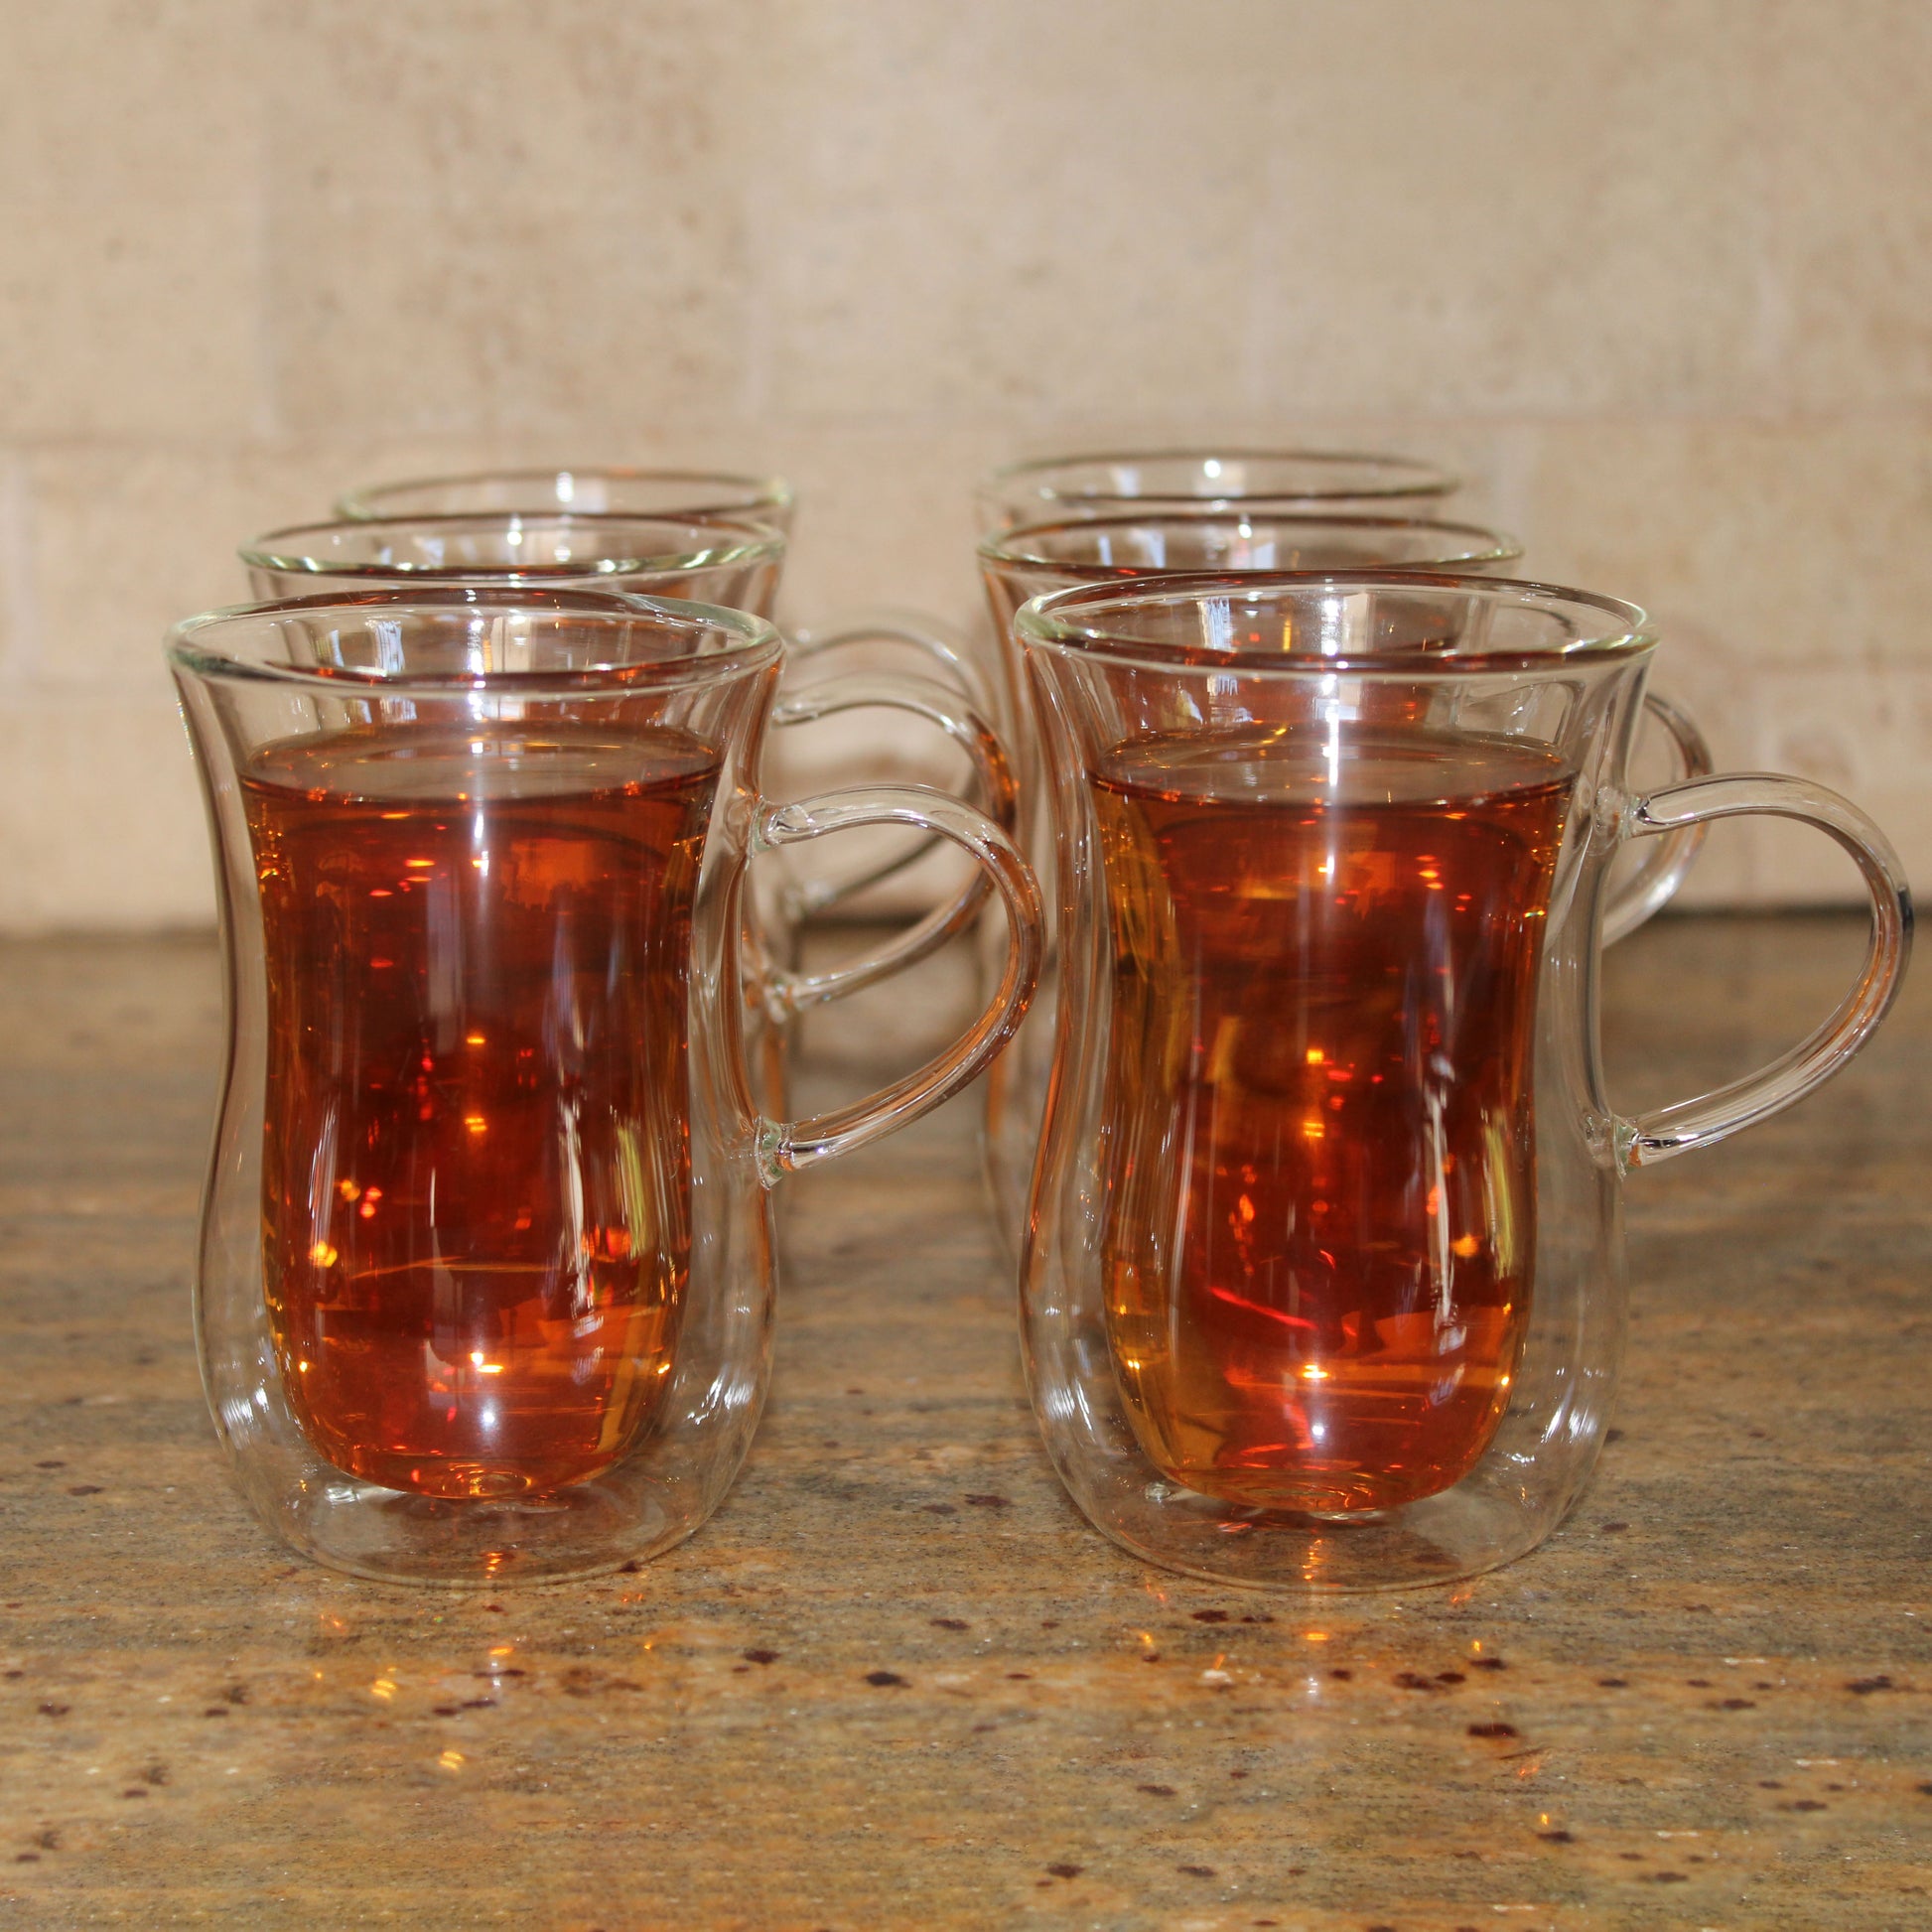 6 oz Glass Tea Cup